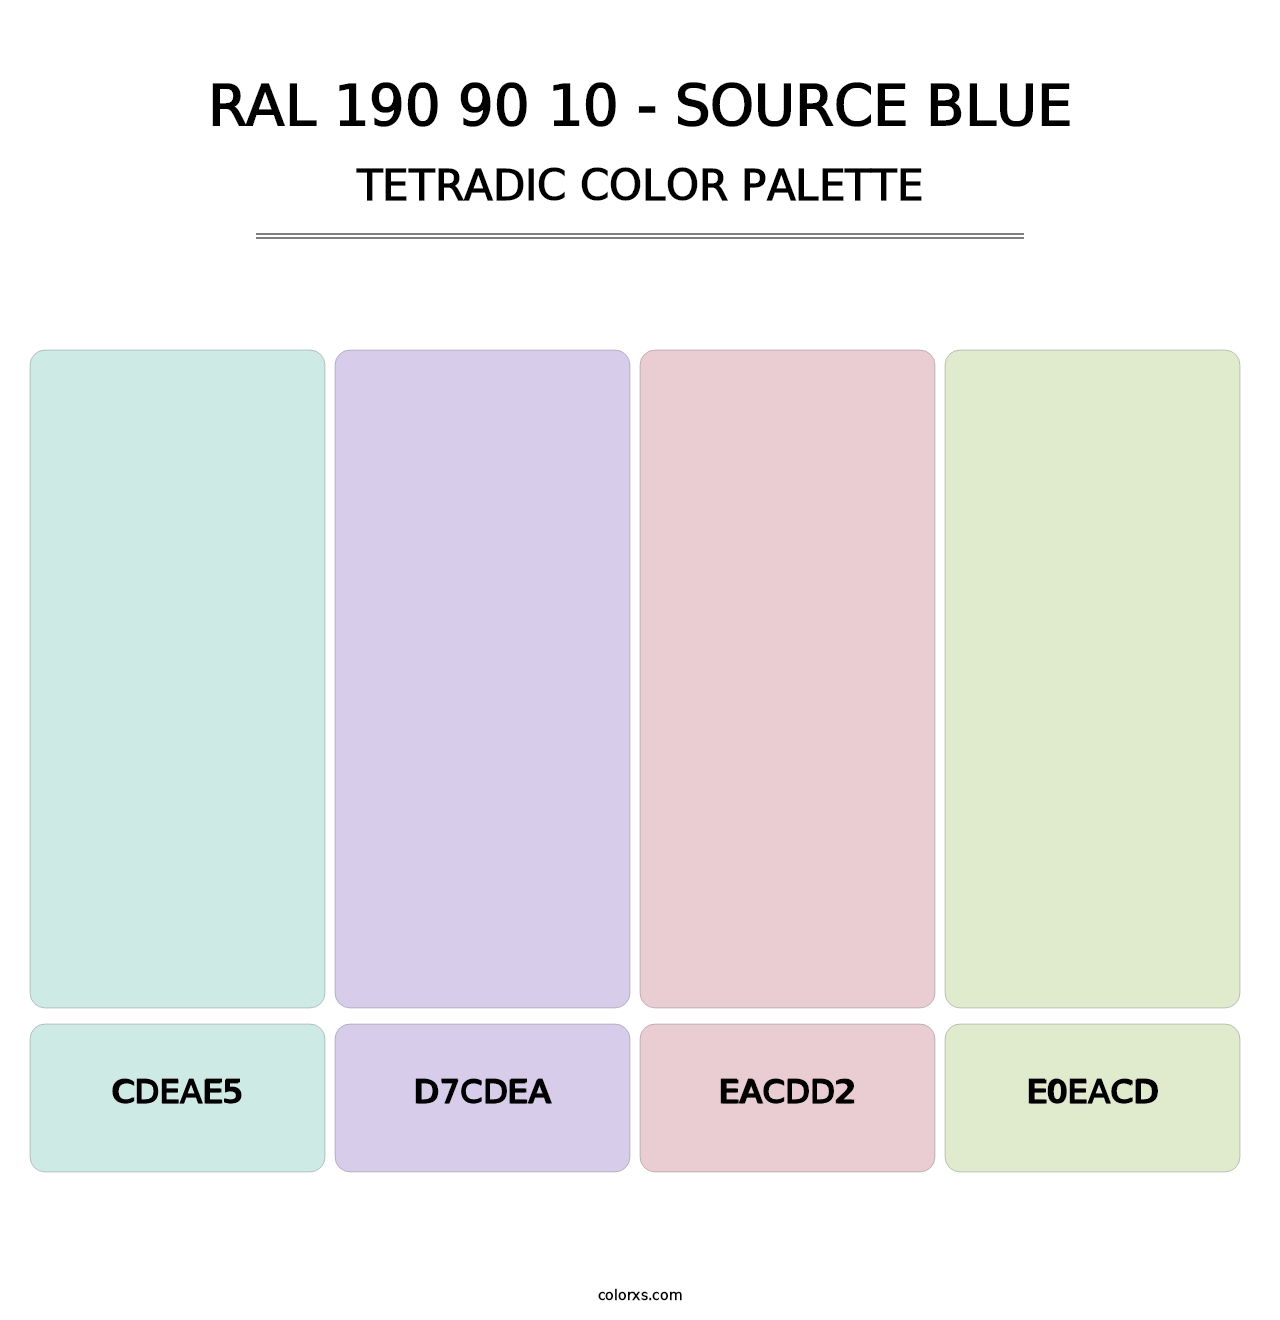 RAL 190 90 10 - Source Blue - Tetradic Color Palette